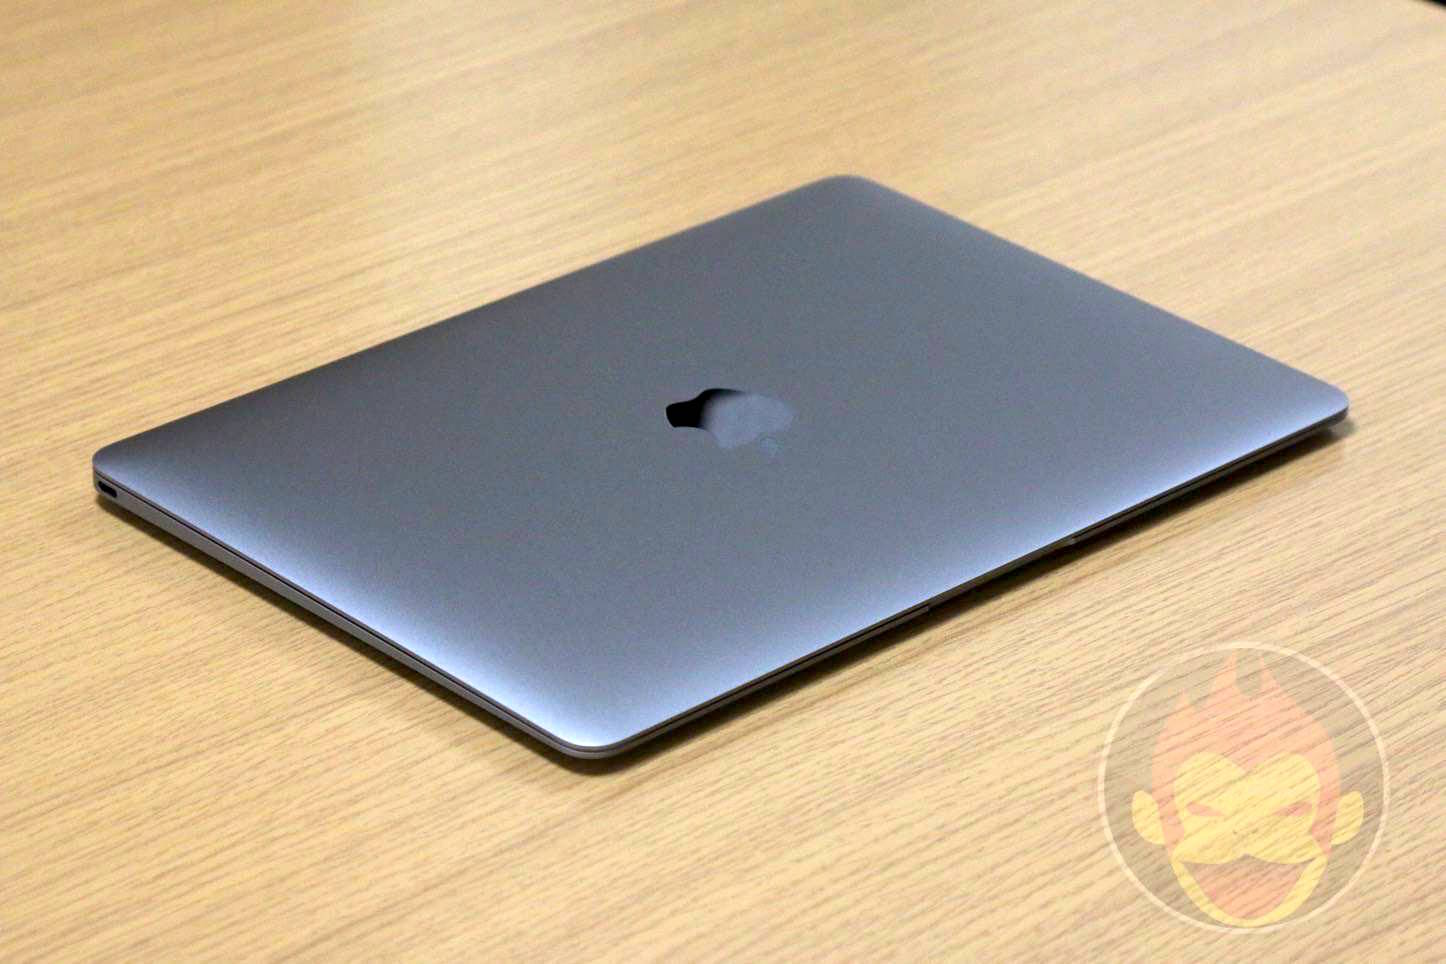 12inch-The-New-MacBook-35.JPG